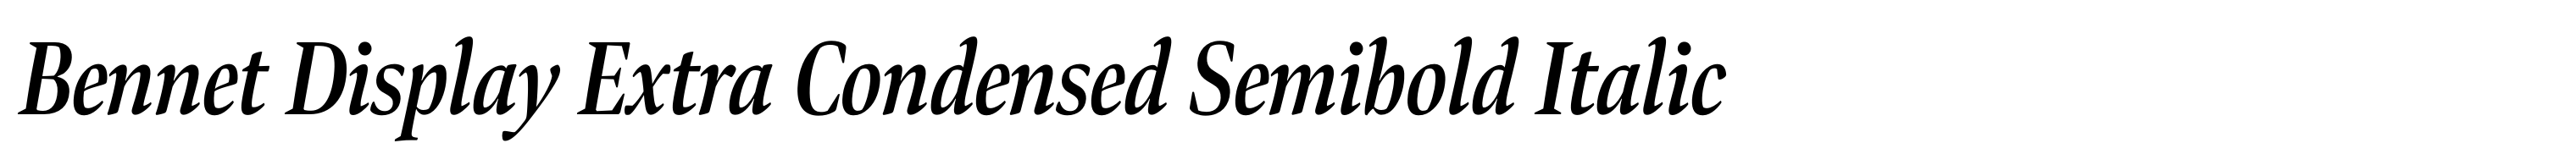 Bennet Display Extra Condensed Semibold Italic